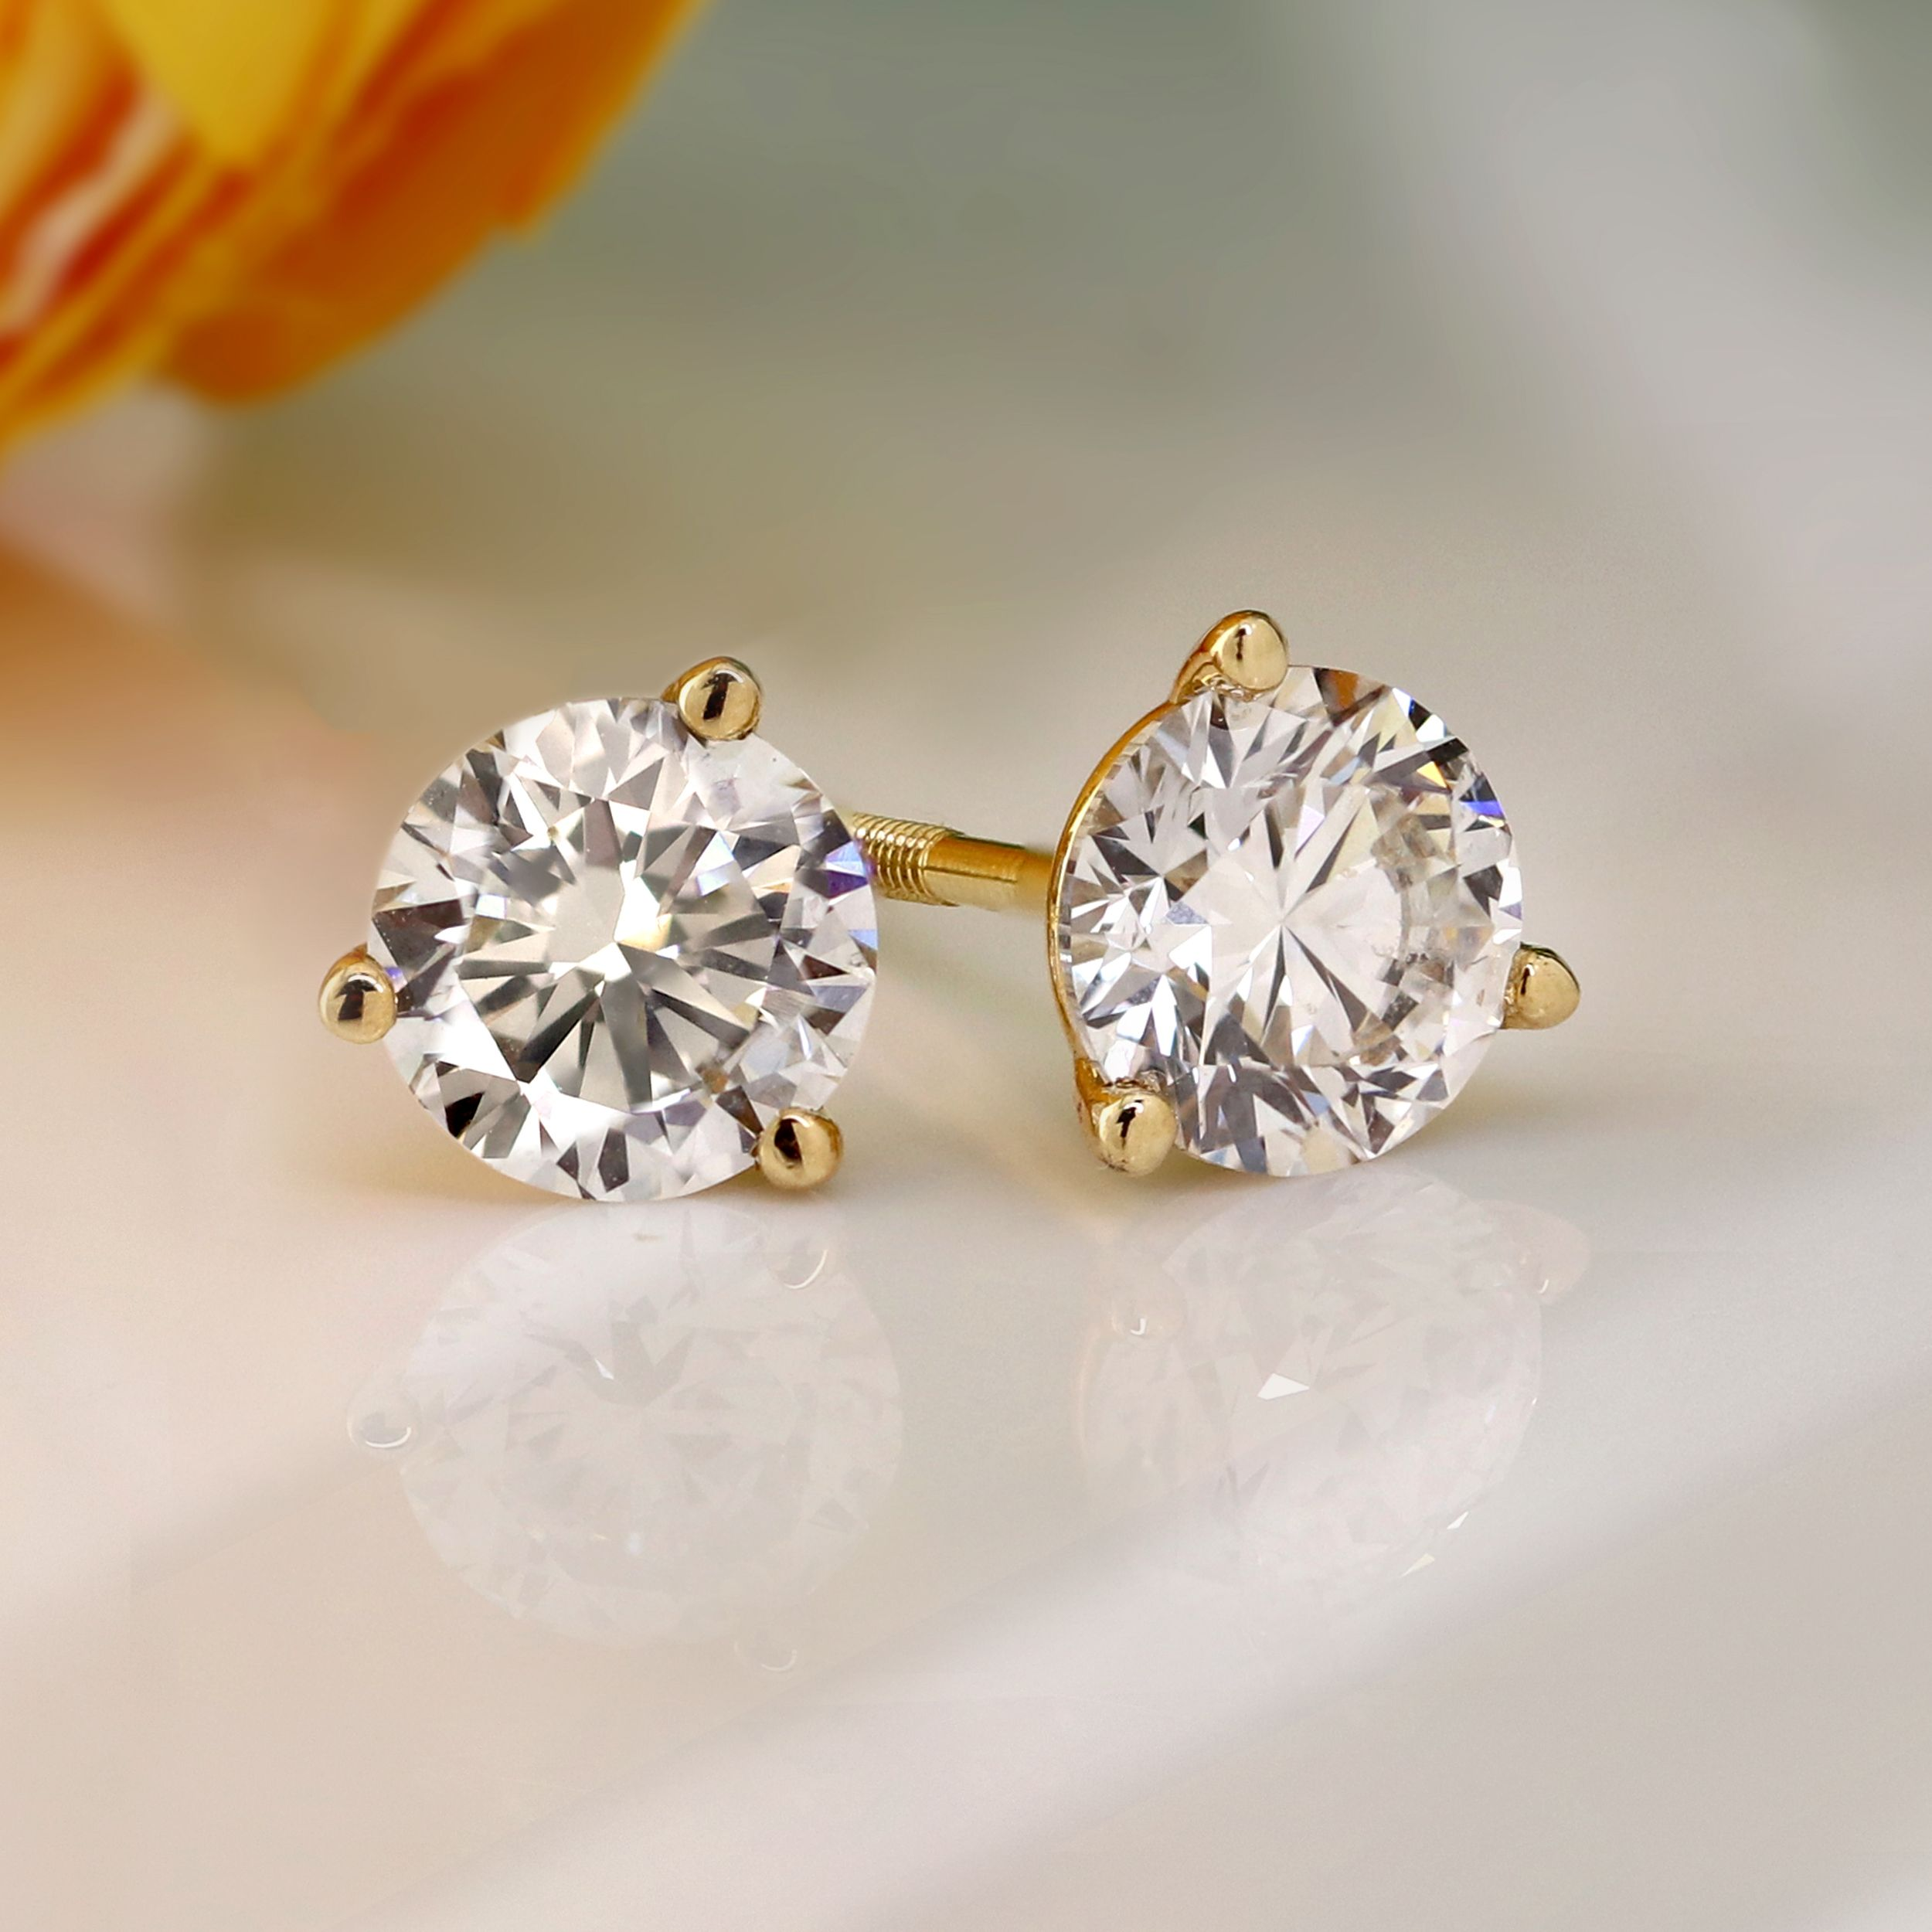 Ever Blossom Ear Studs, White Gold & Diamonds - Jewelry - Categories